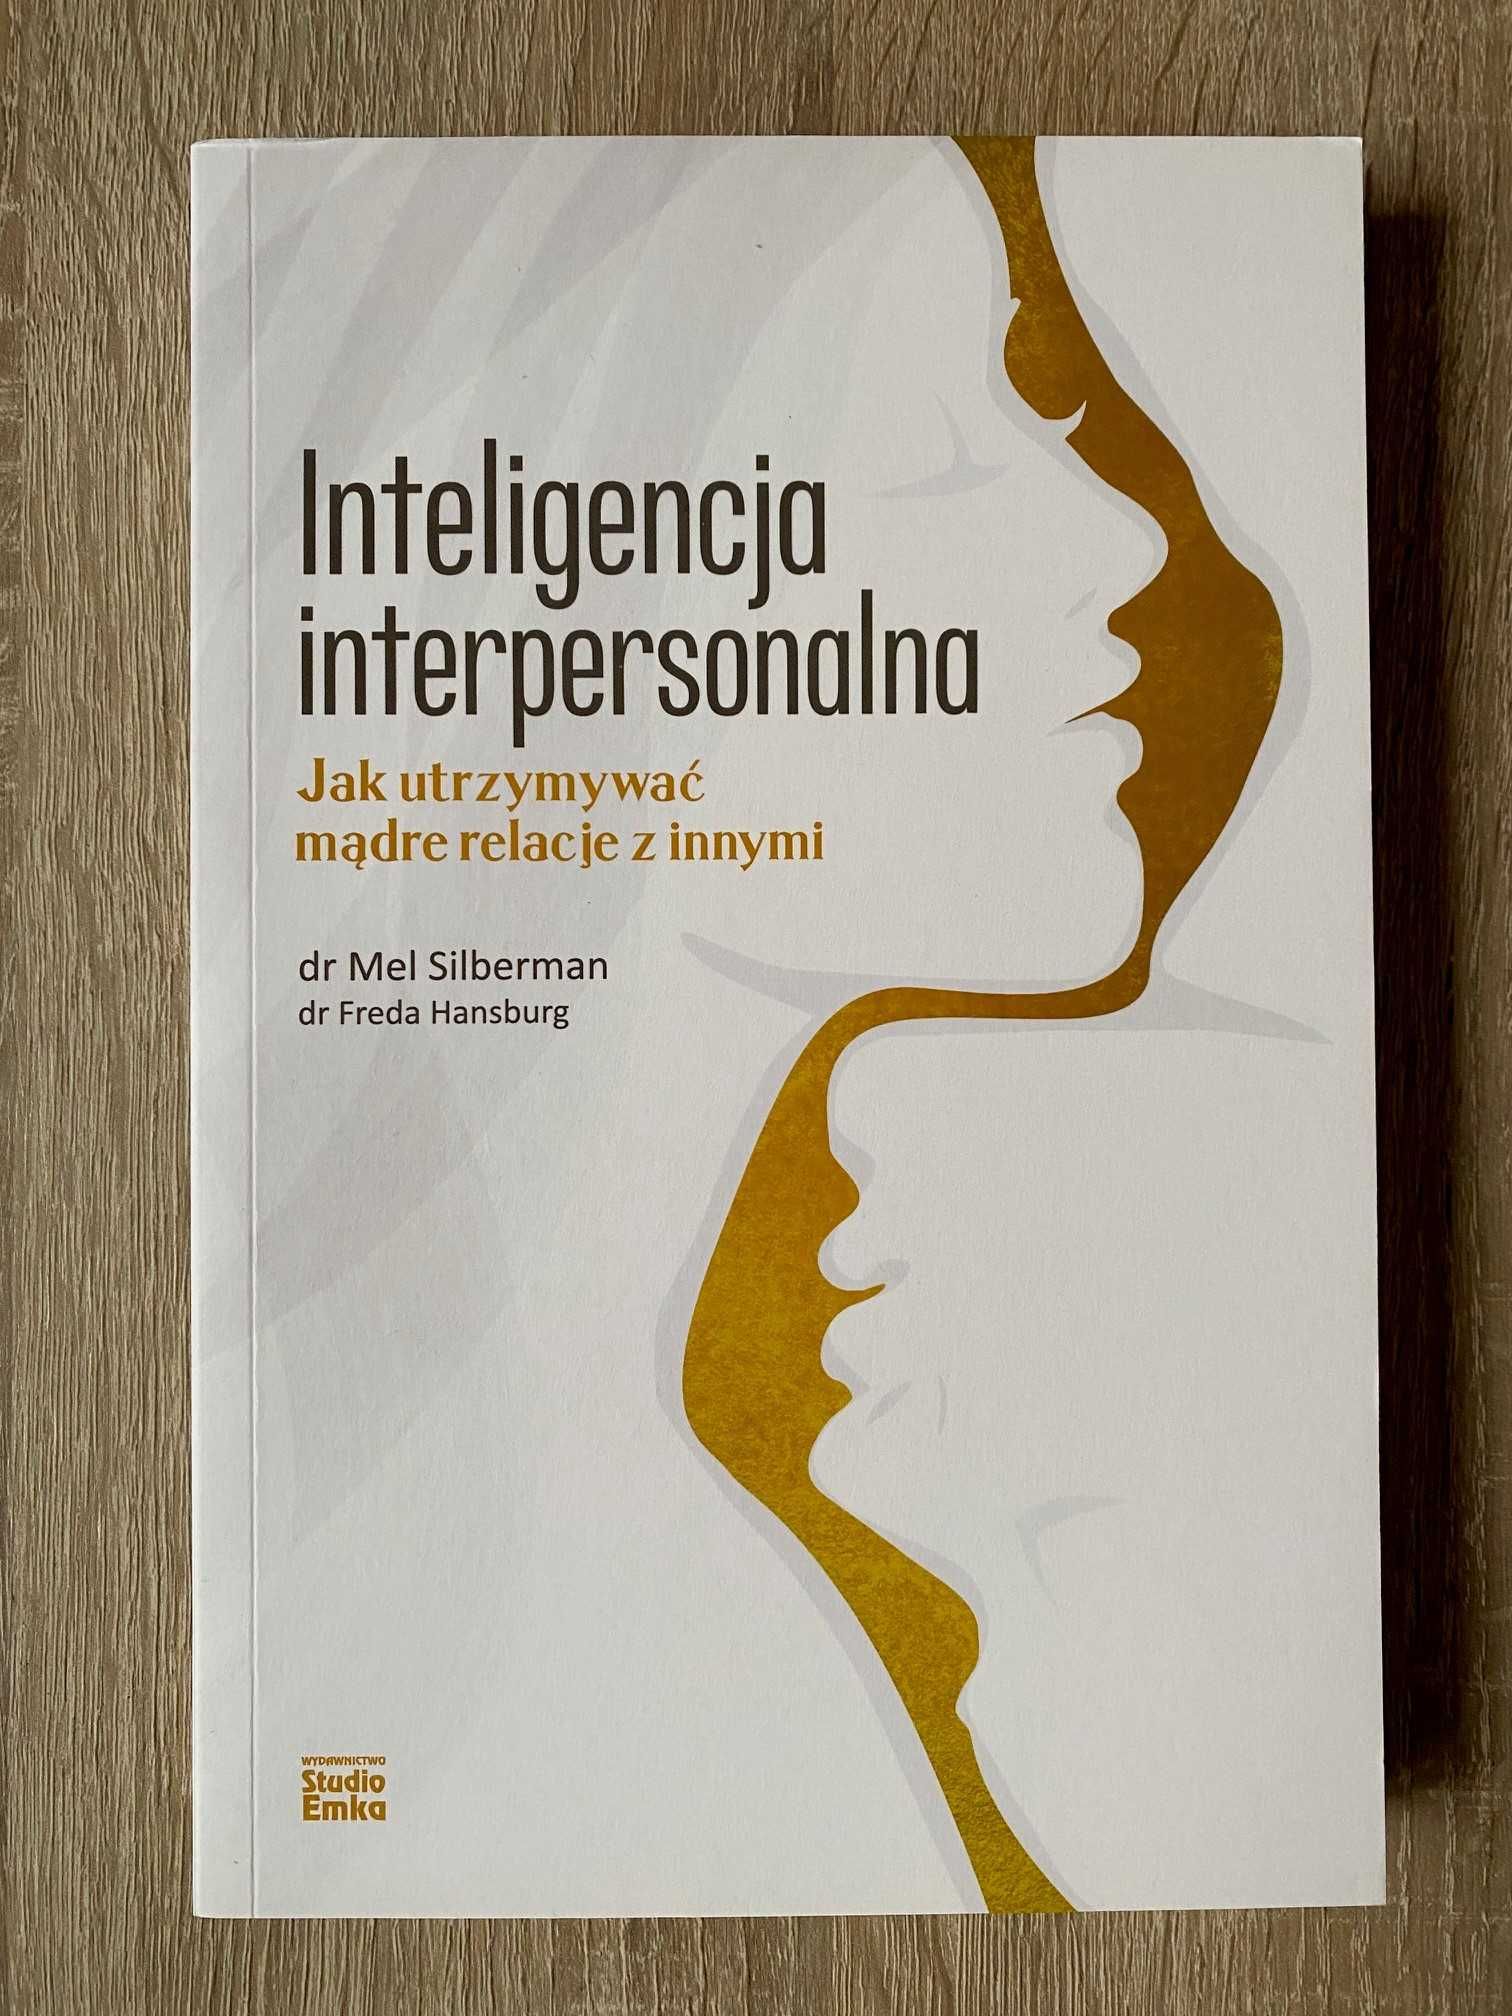 Silberman & Hansburg "Inteligencja interpersonalna" - książka jak nowa